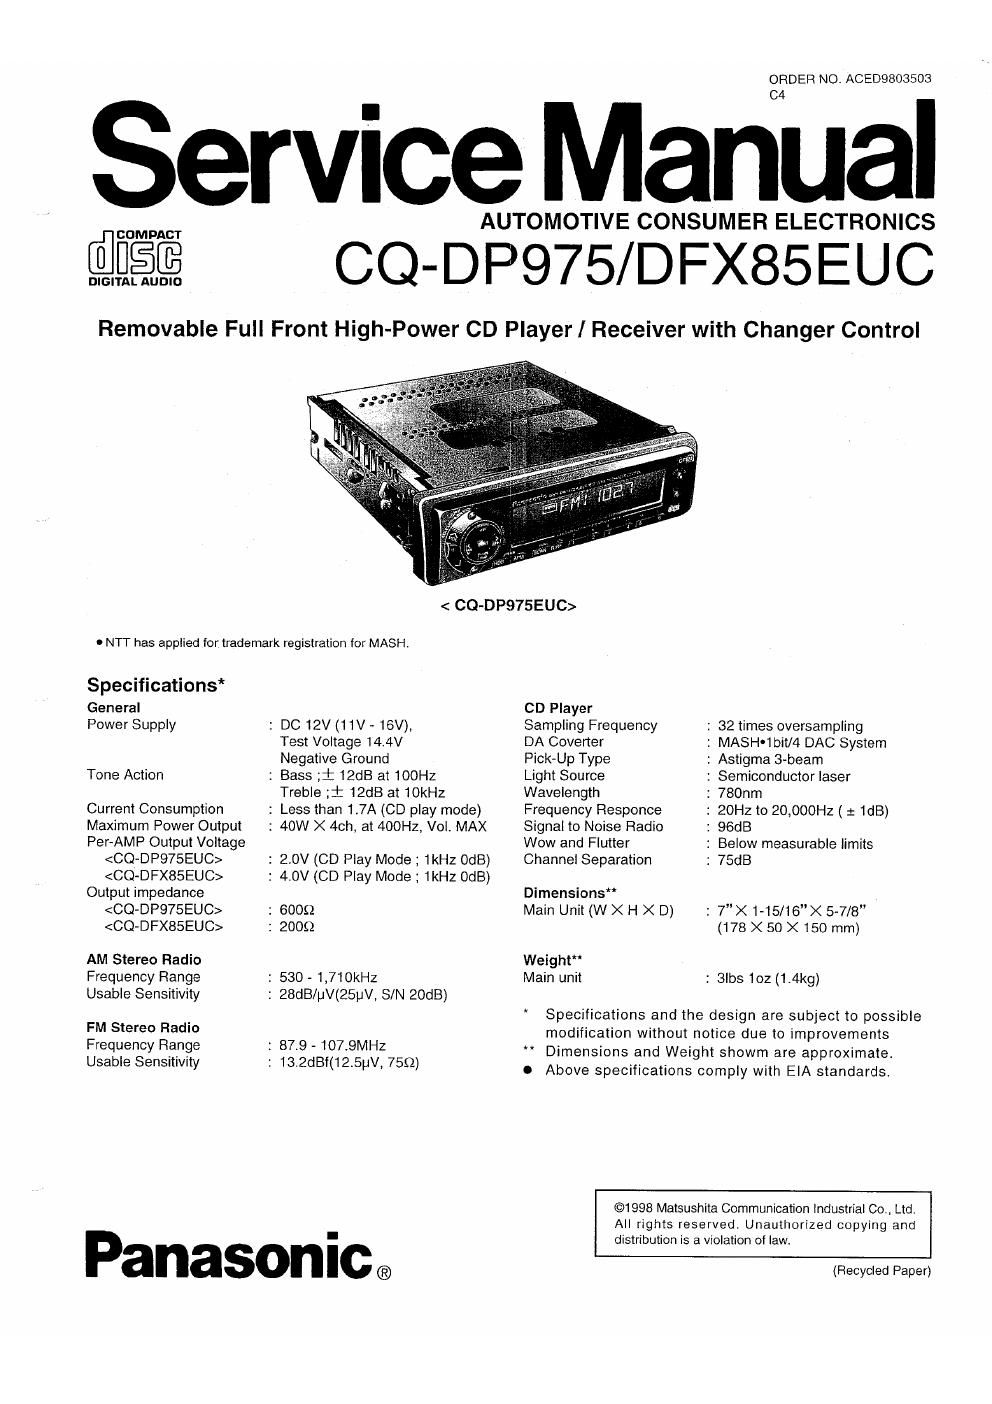 panasonic cq dfx 85 euc service manual